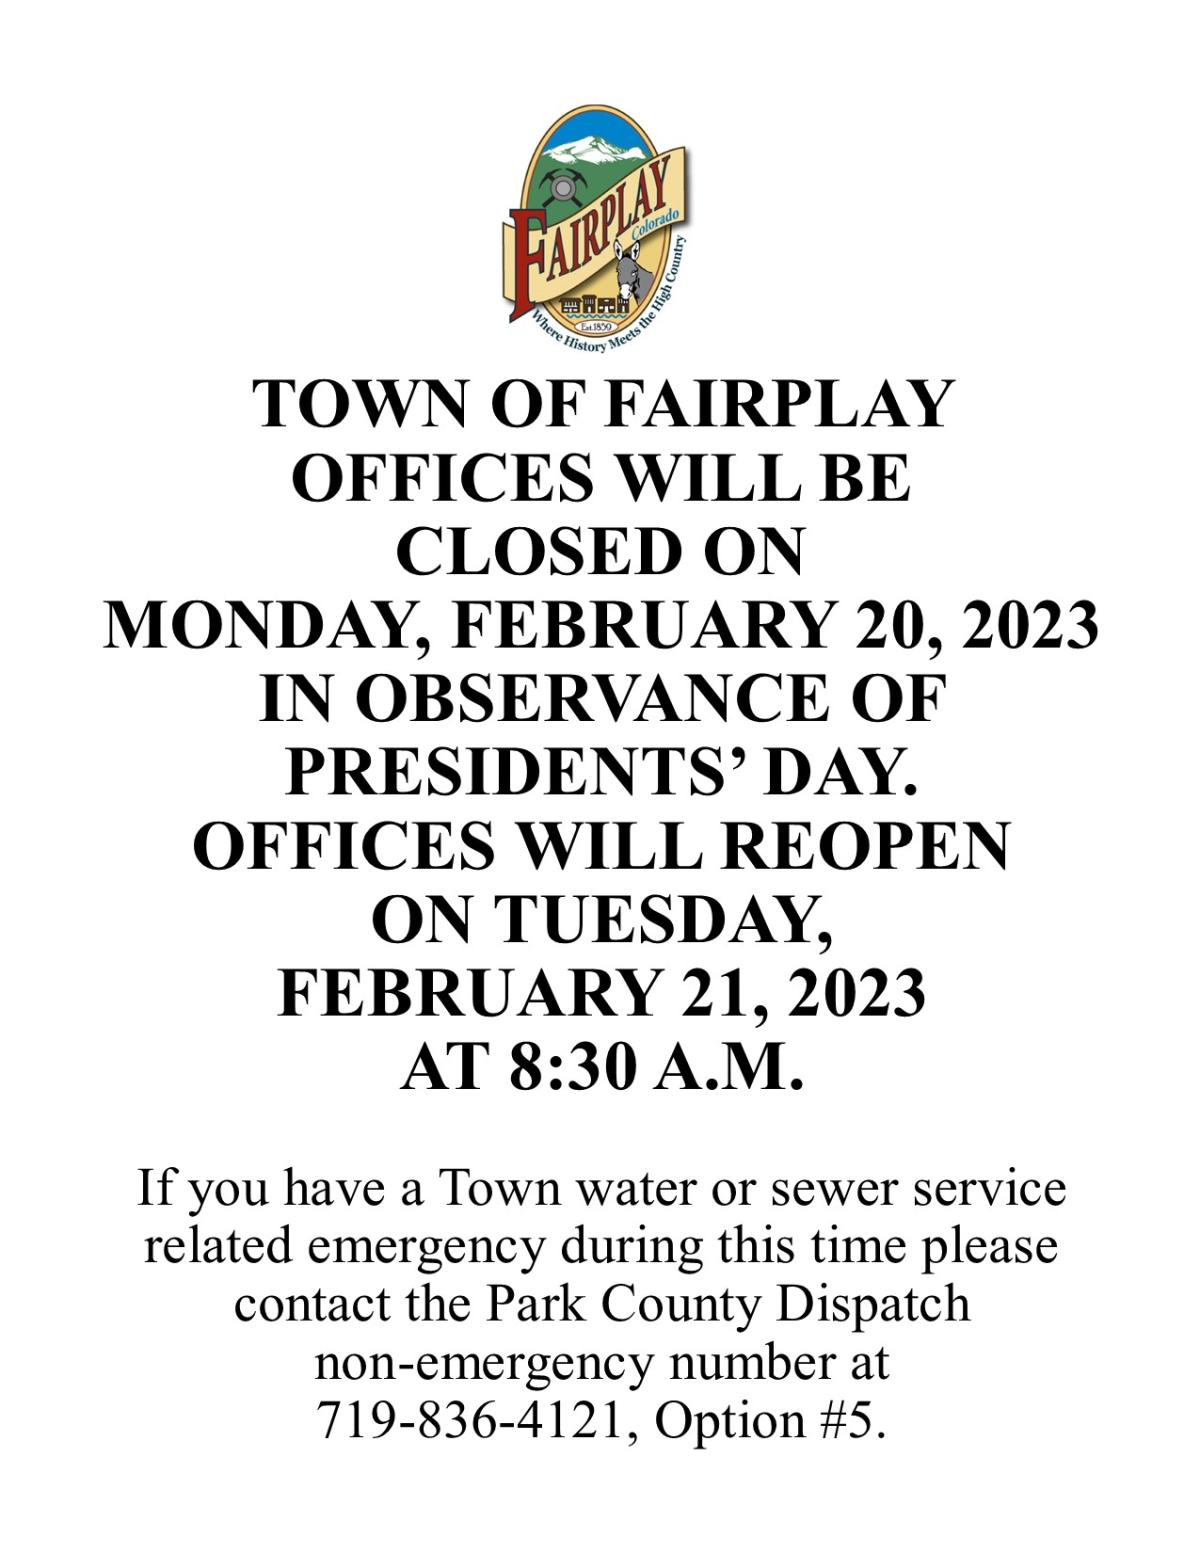 President's Day Closure Notice